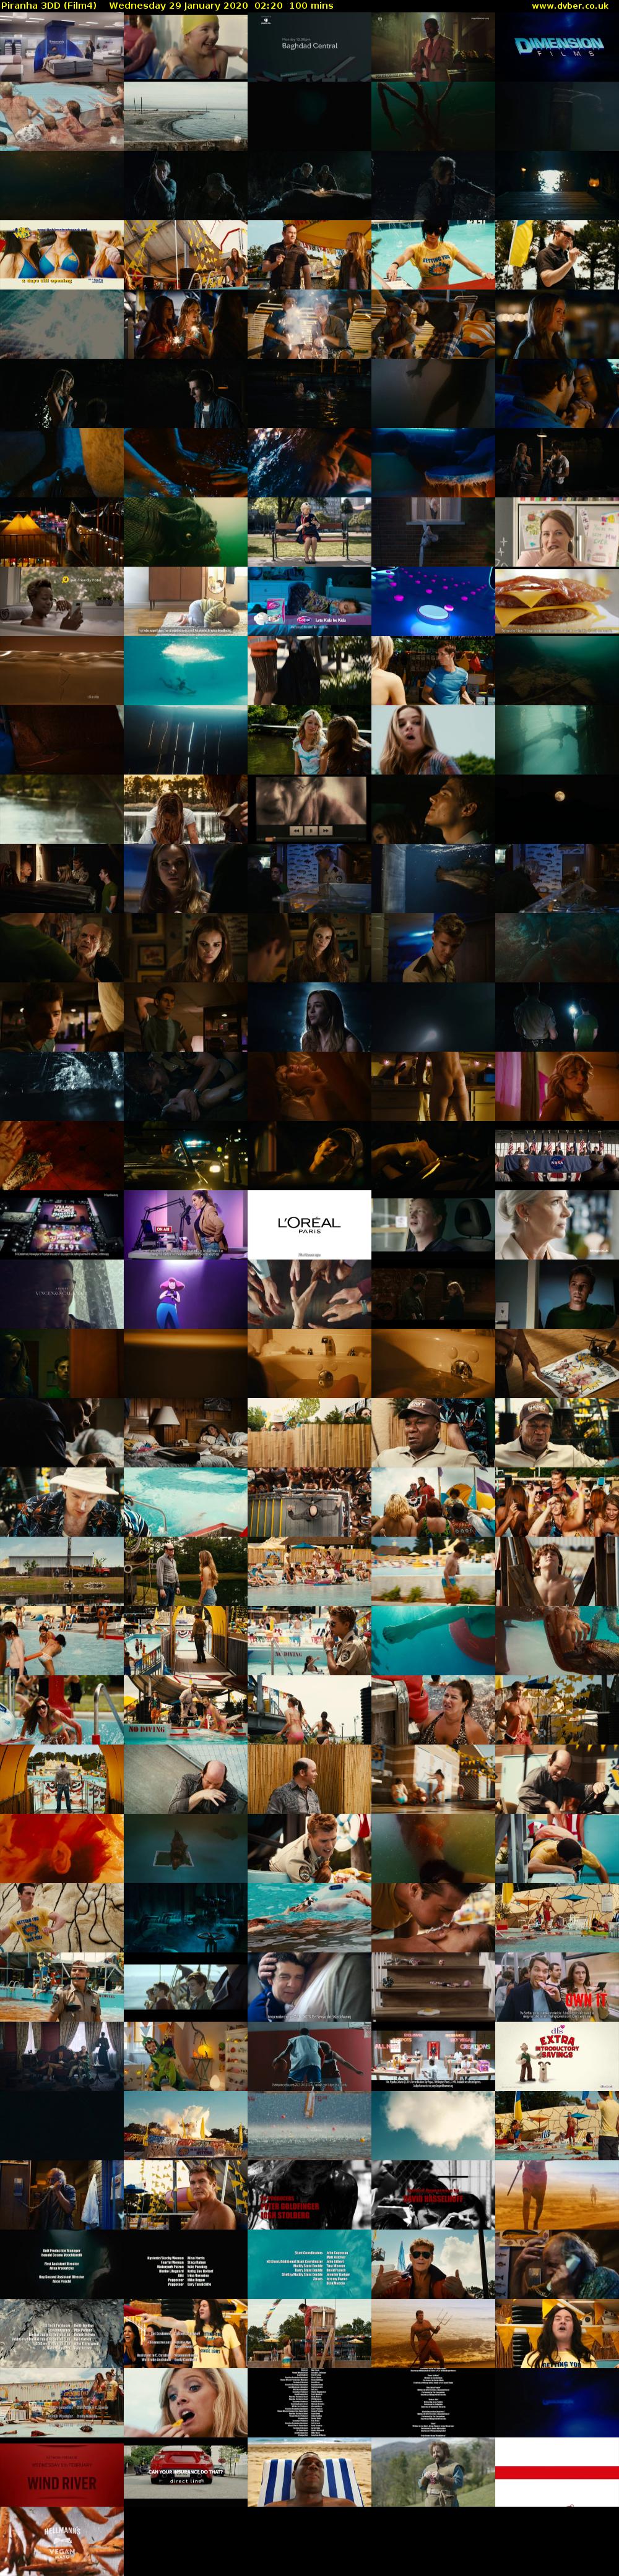 Piranha 3DD (Film4) Wednesday 29 January 2020 02:20 - 04:00